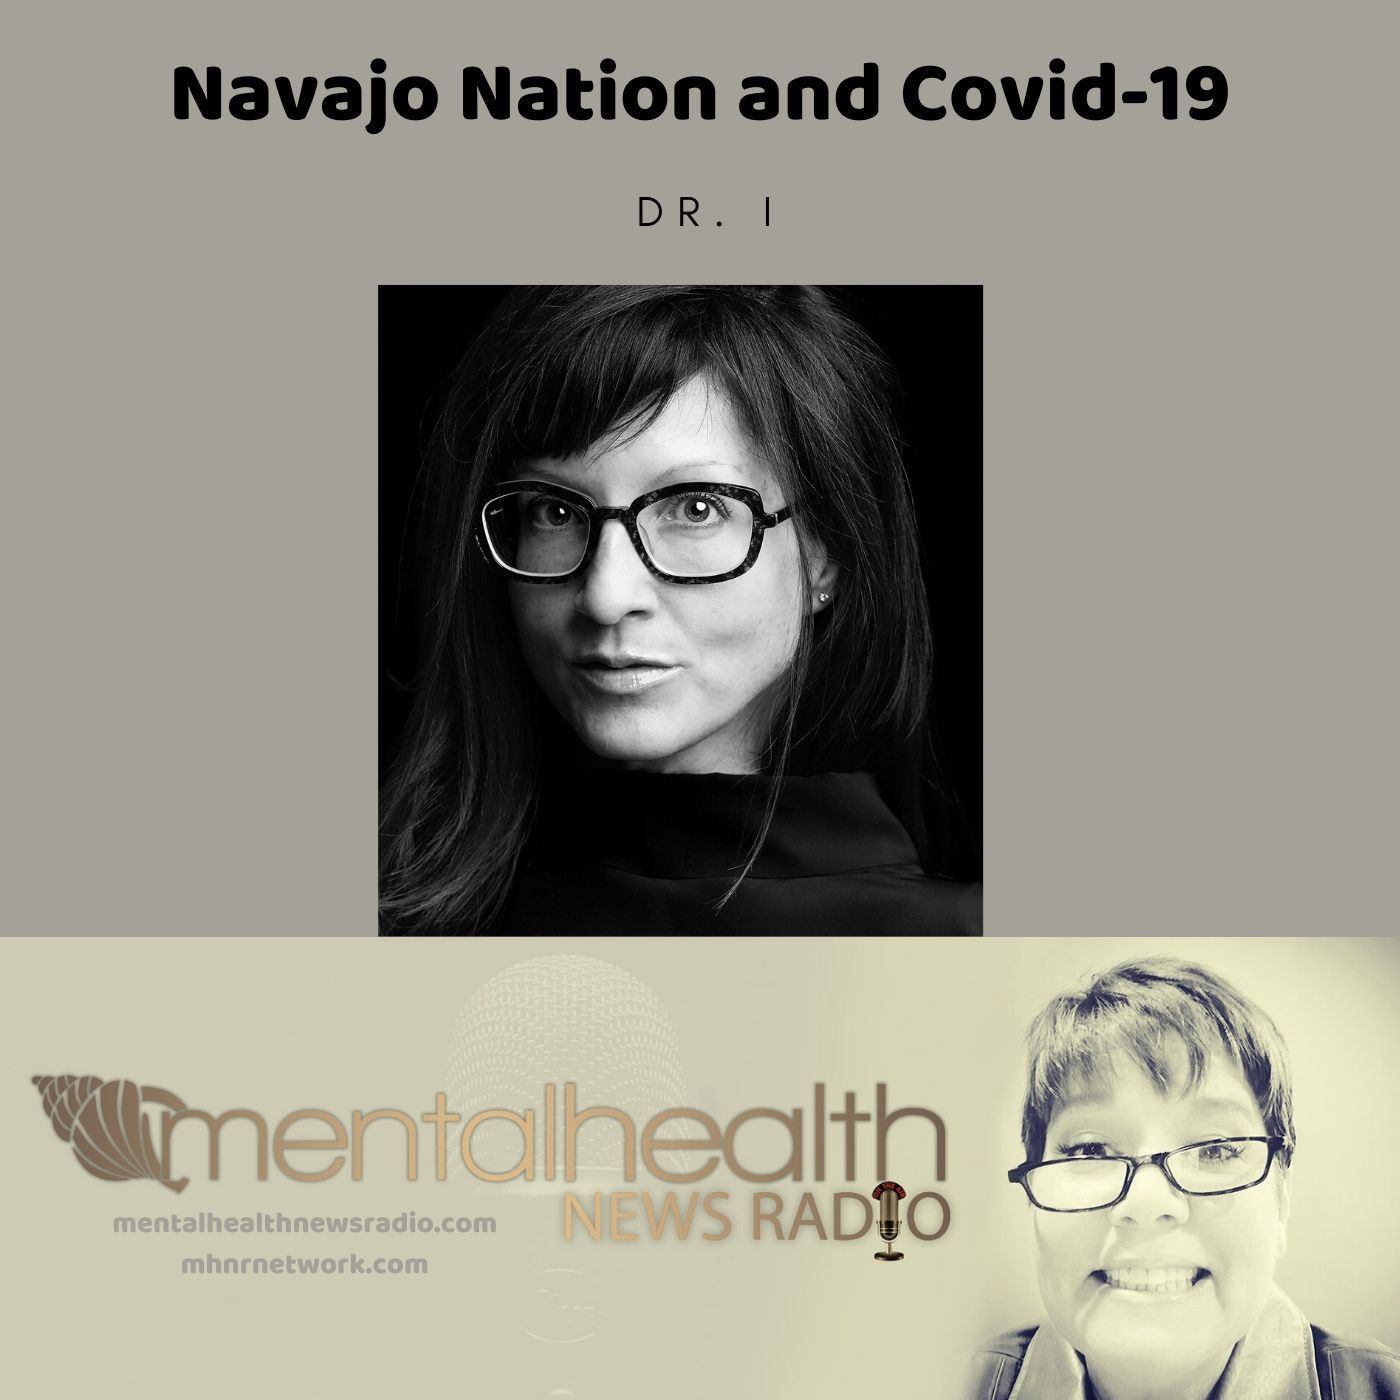 Mental Health News Radio - Navajo Nation and Covid-19